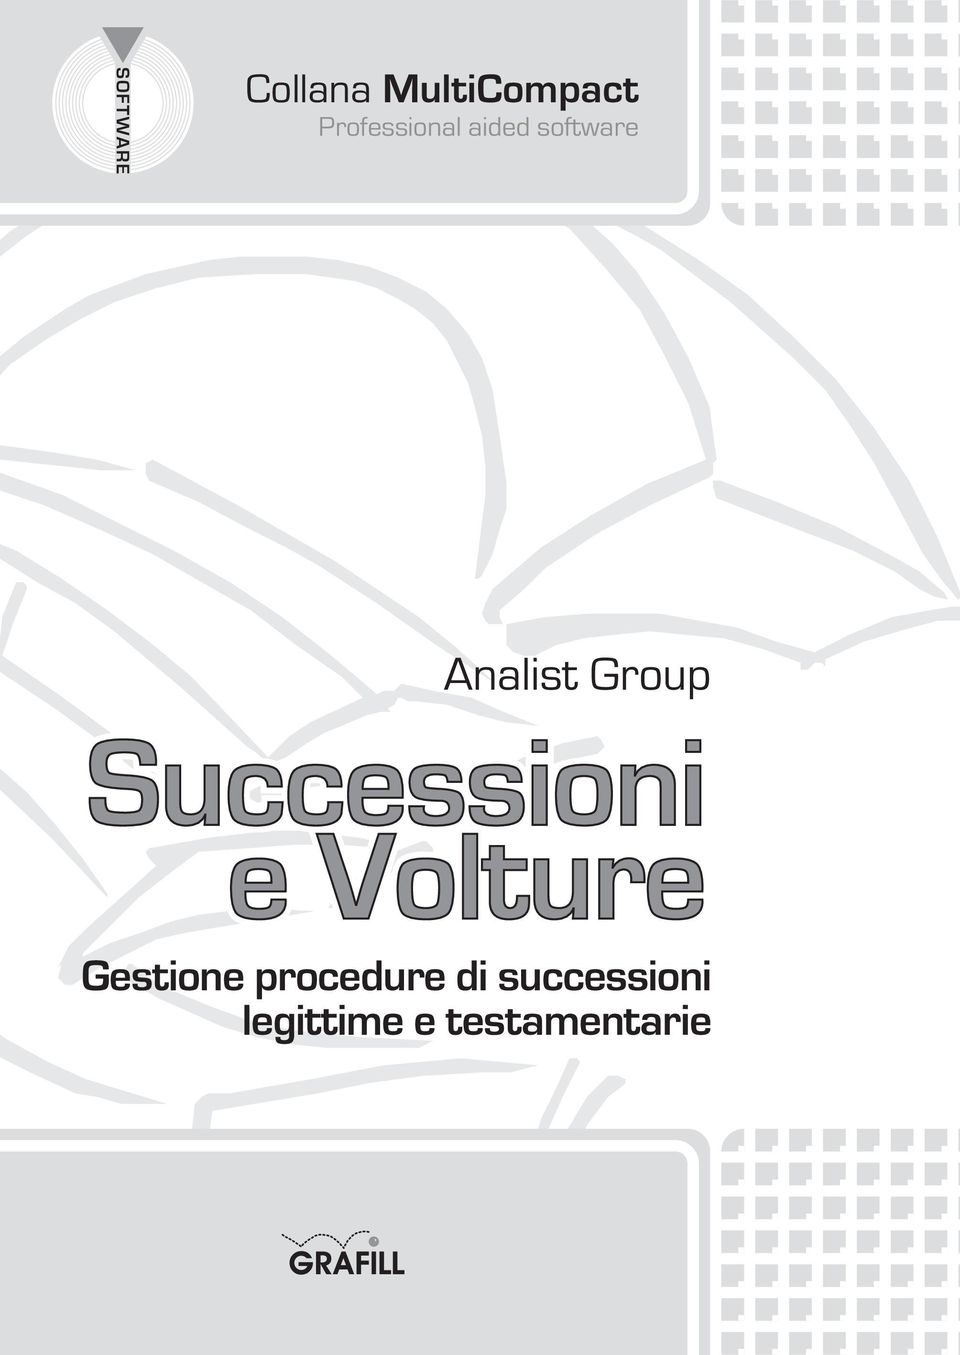 Analist Group Gestione procedure